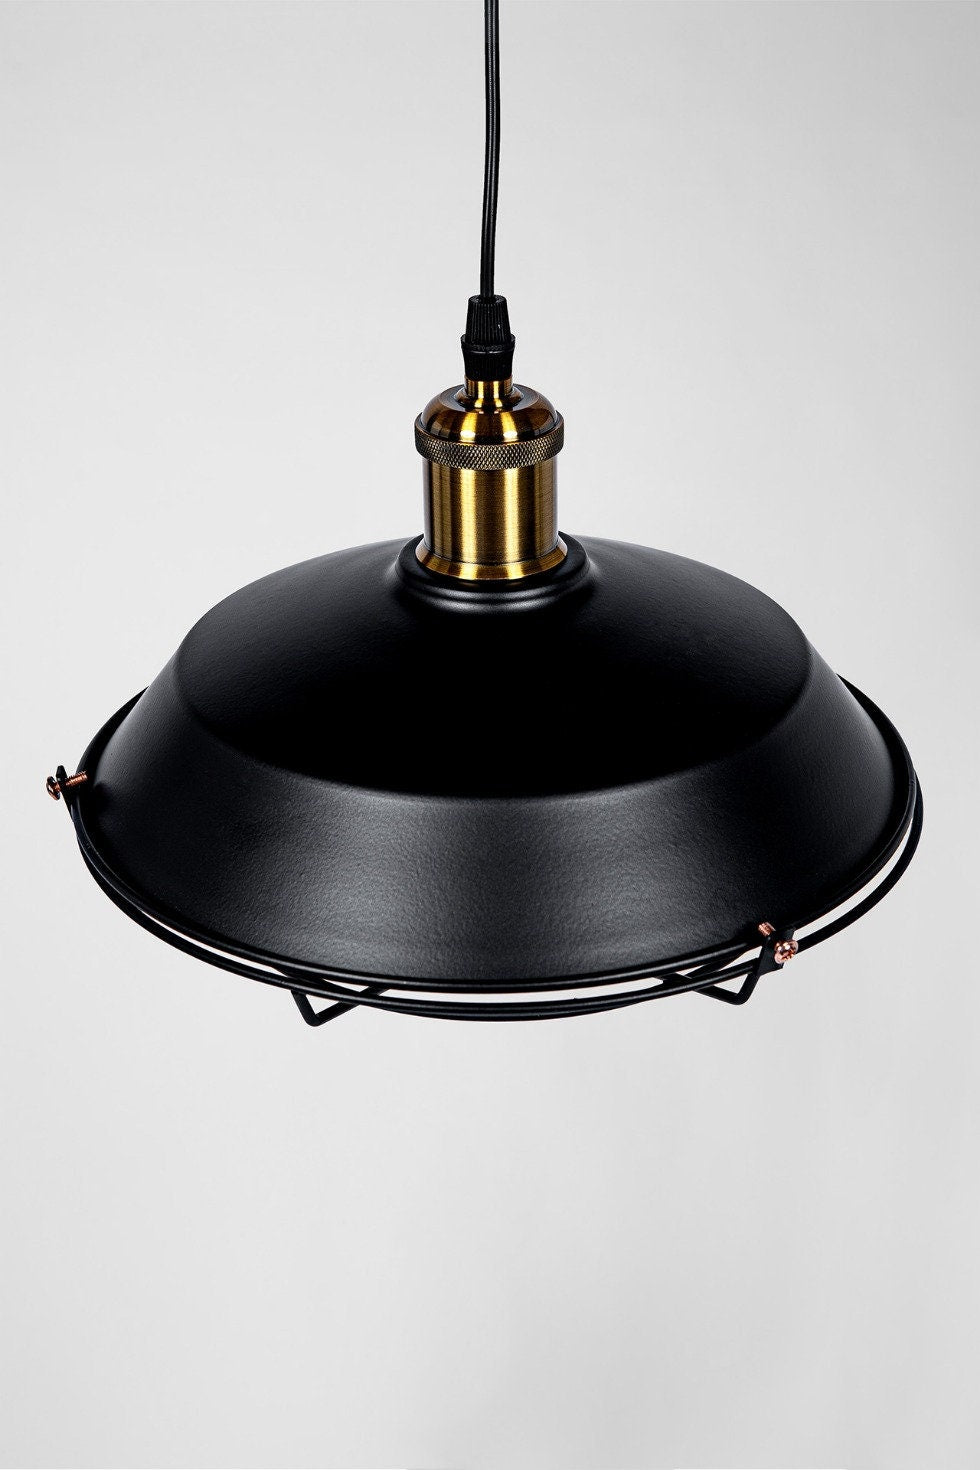 Bobby Black - Vintage industrial design metal lamp with cage